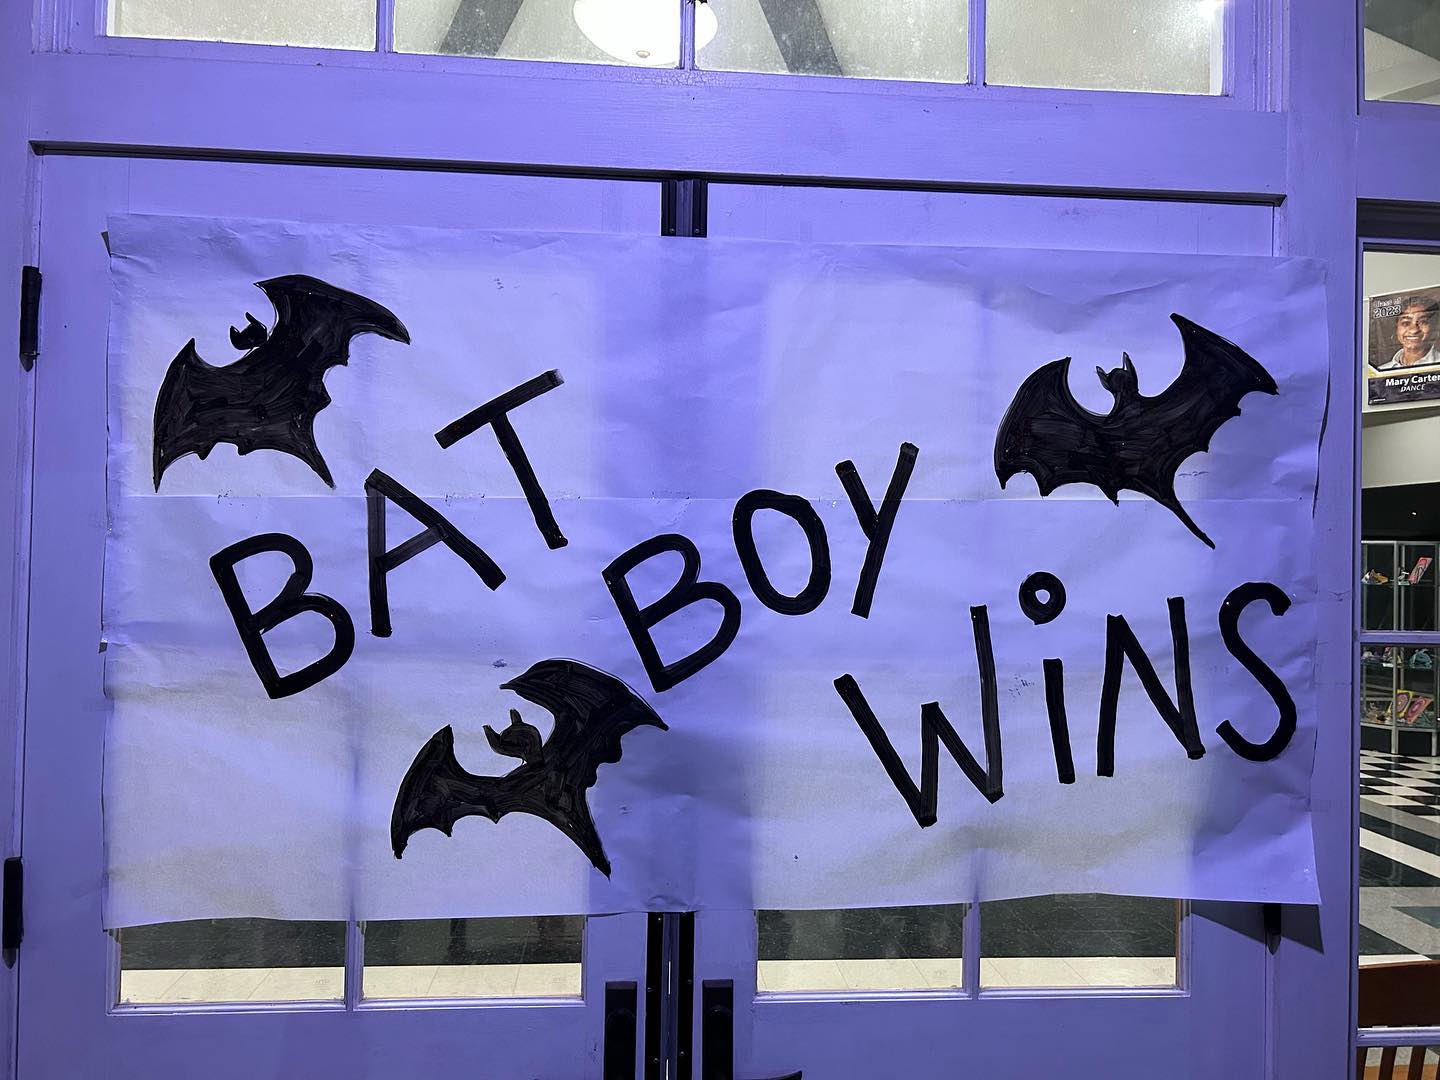 Bat Boy wins sign